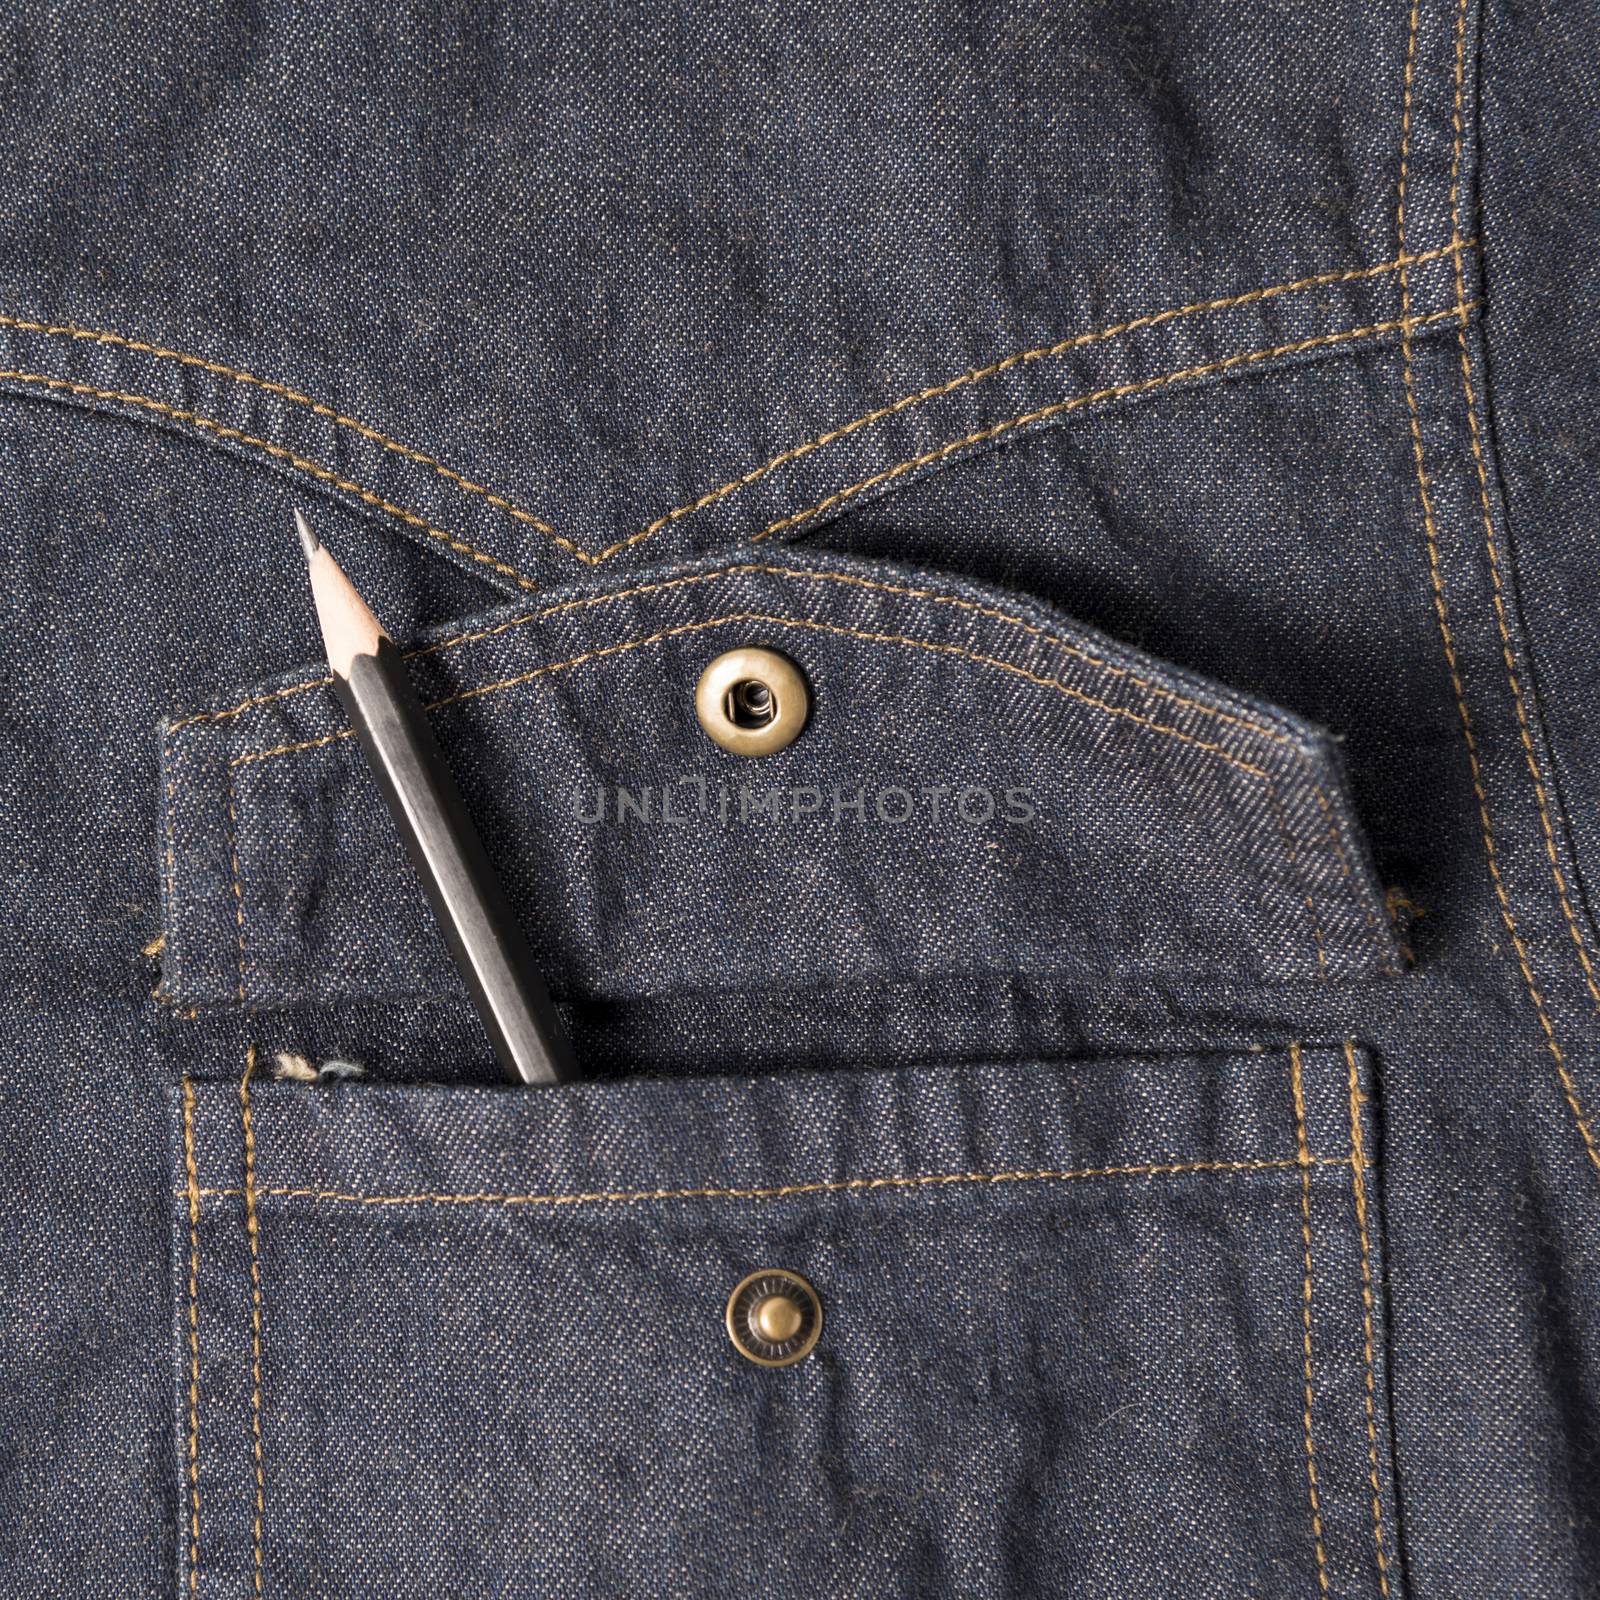 pencil in jean pocket by ammza12